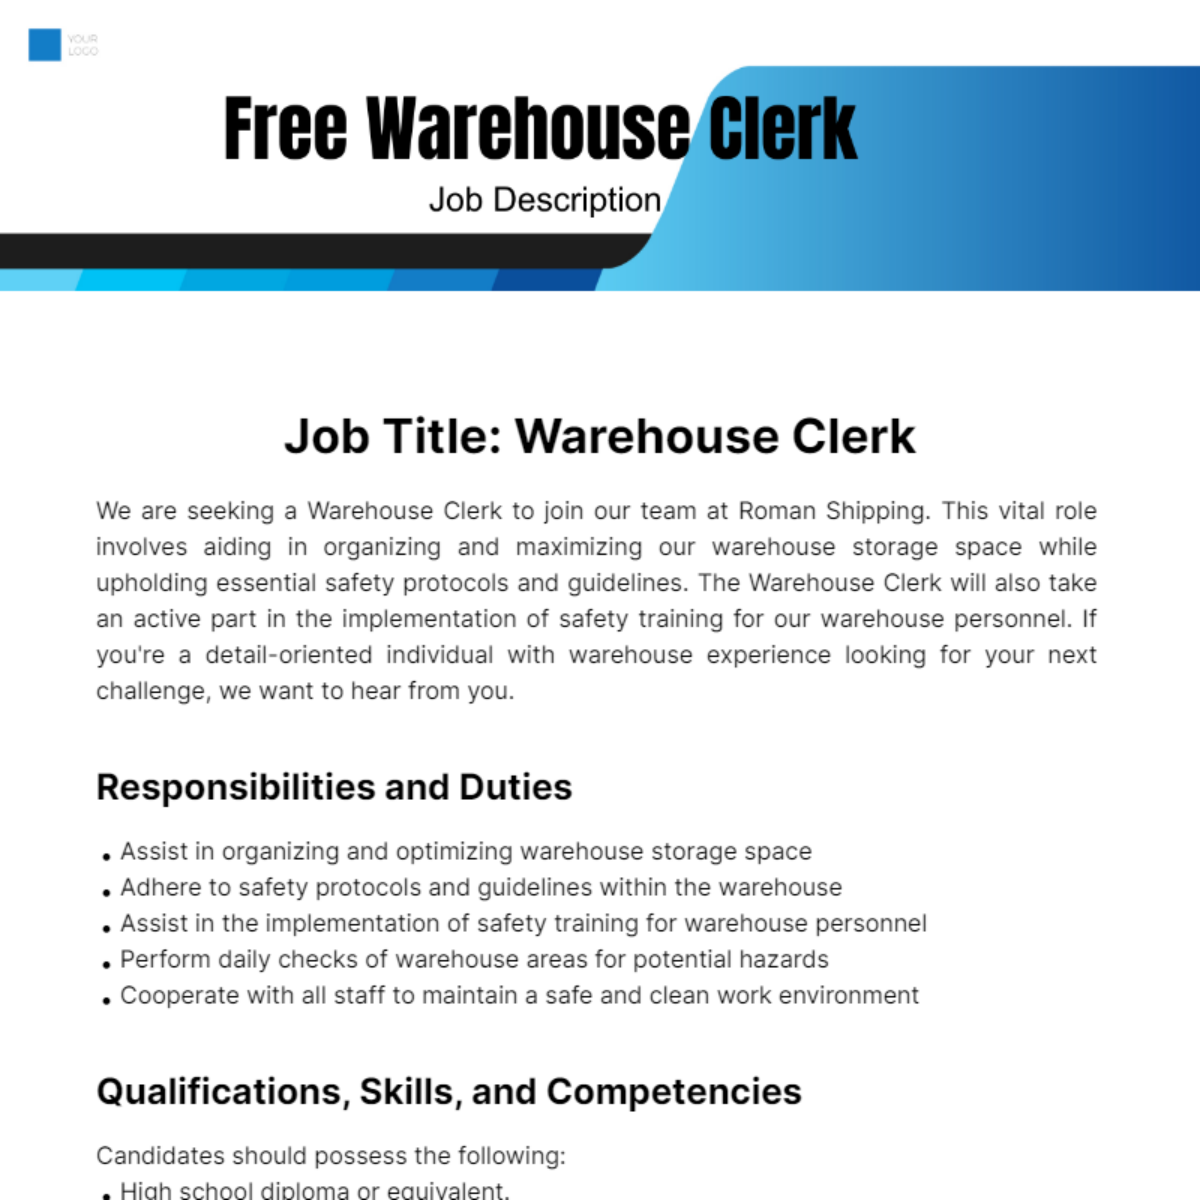 Free Warehouse Clerk Job Description Template